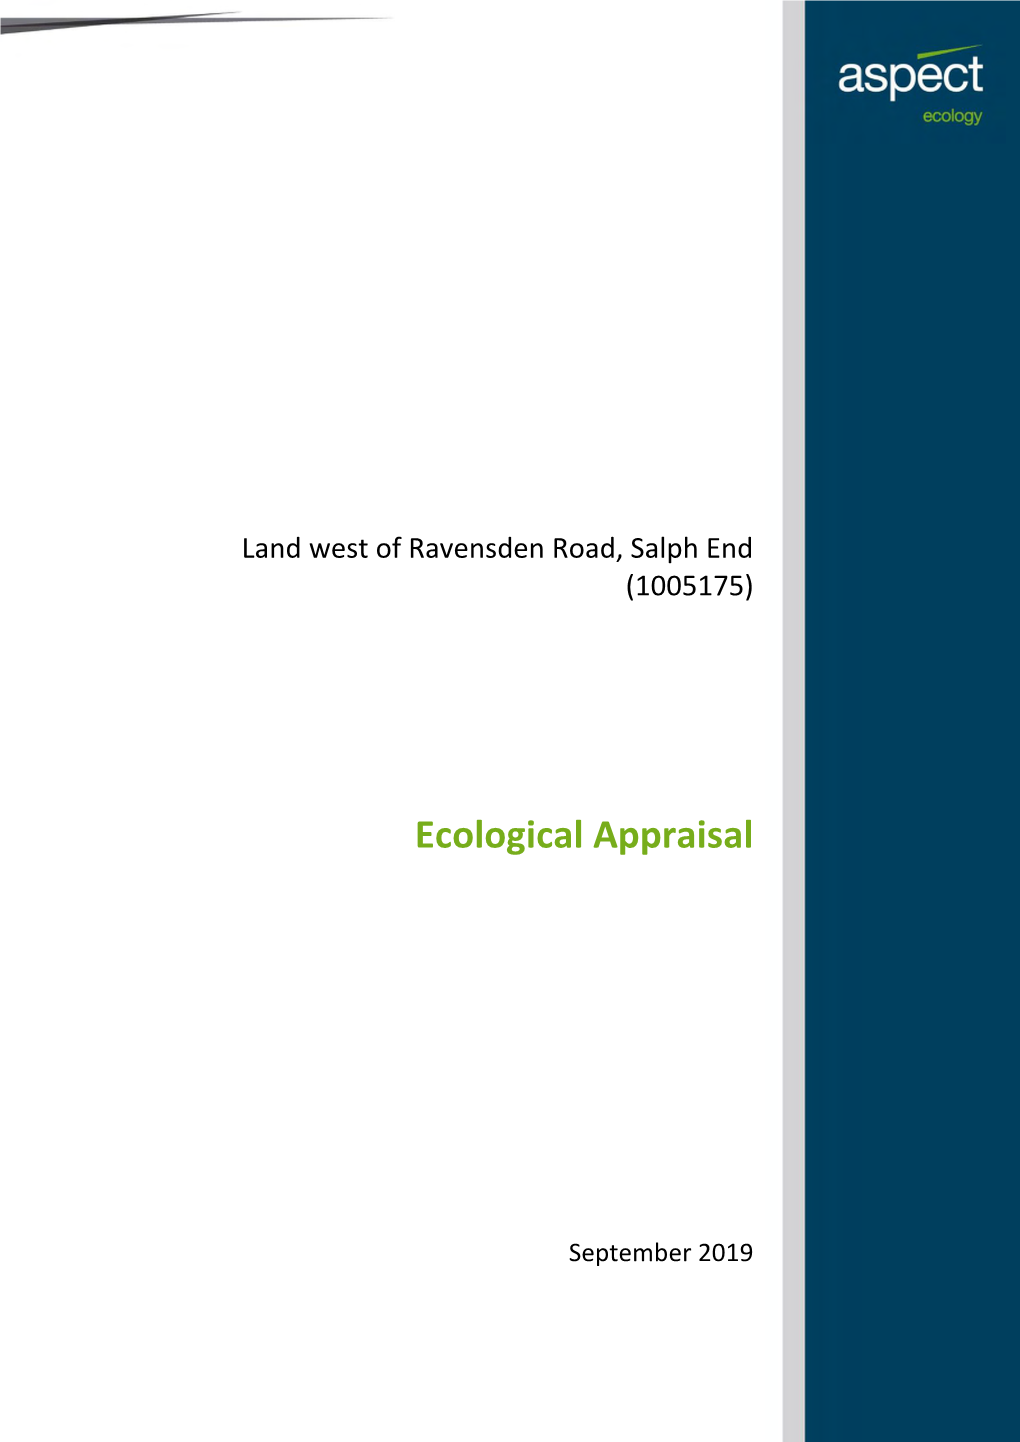 Ecological Appraisal